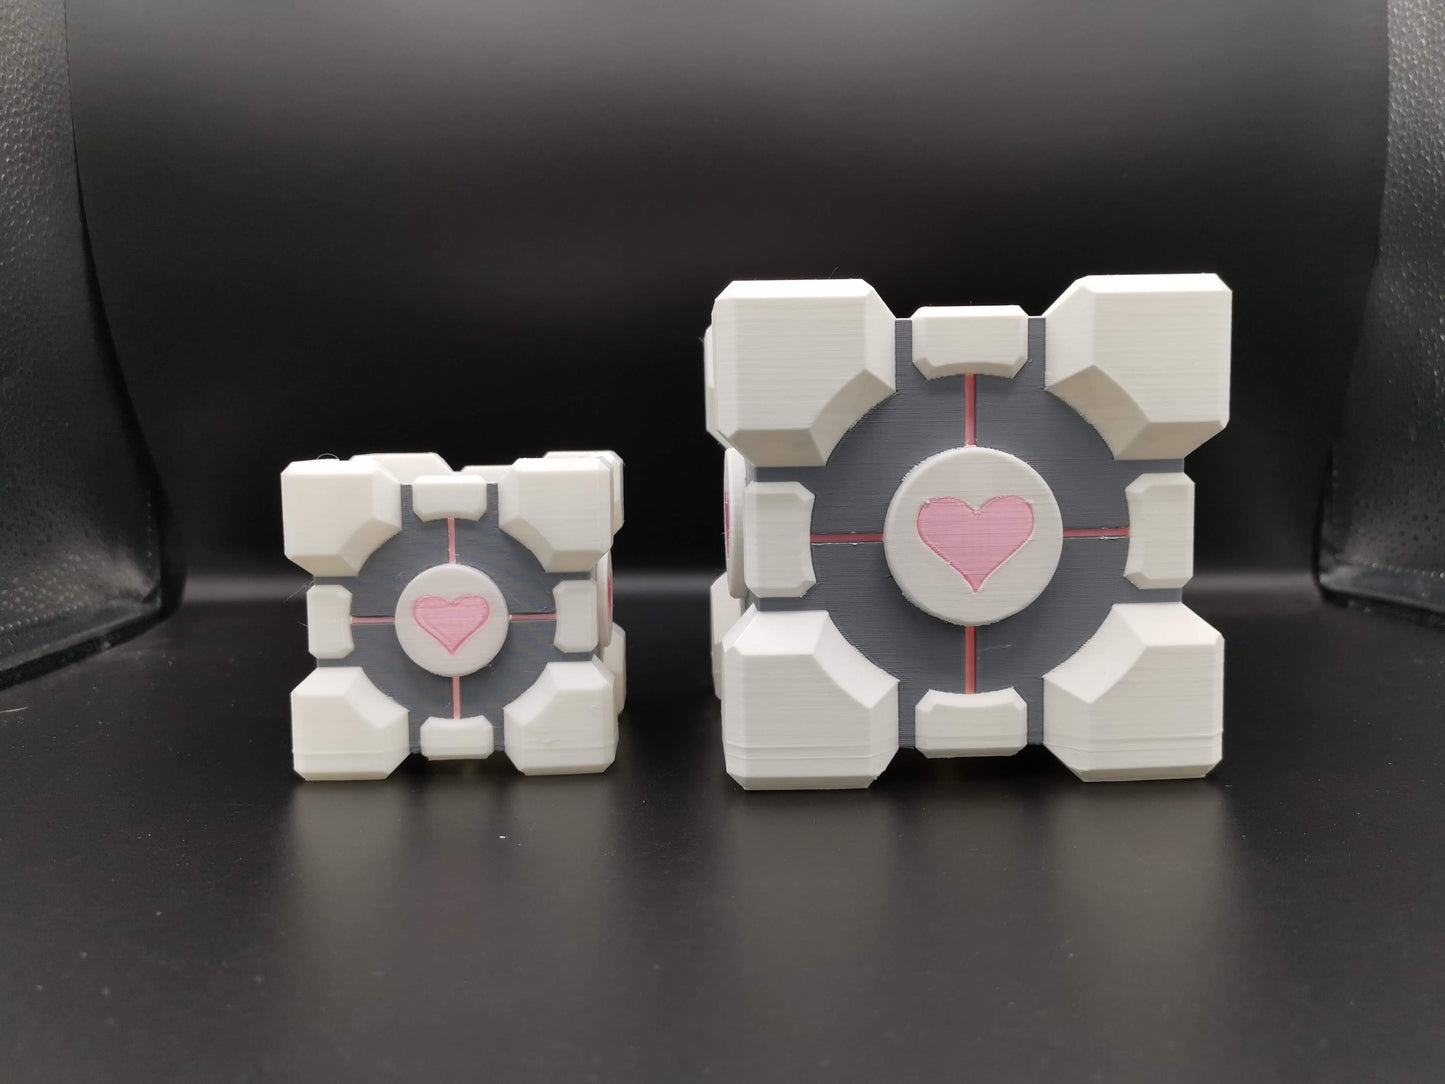 Companion Cube Portal planters in two sizes